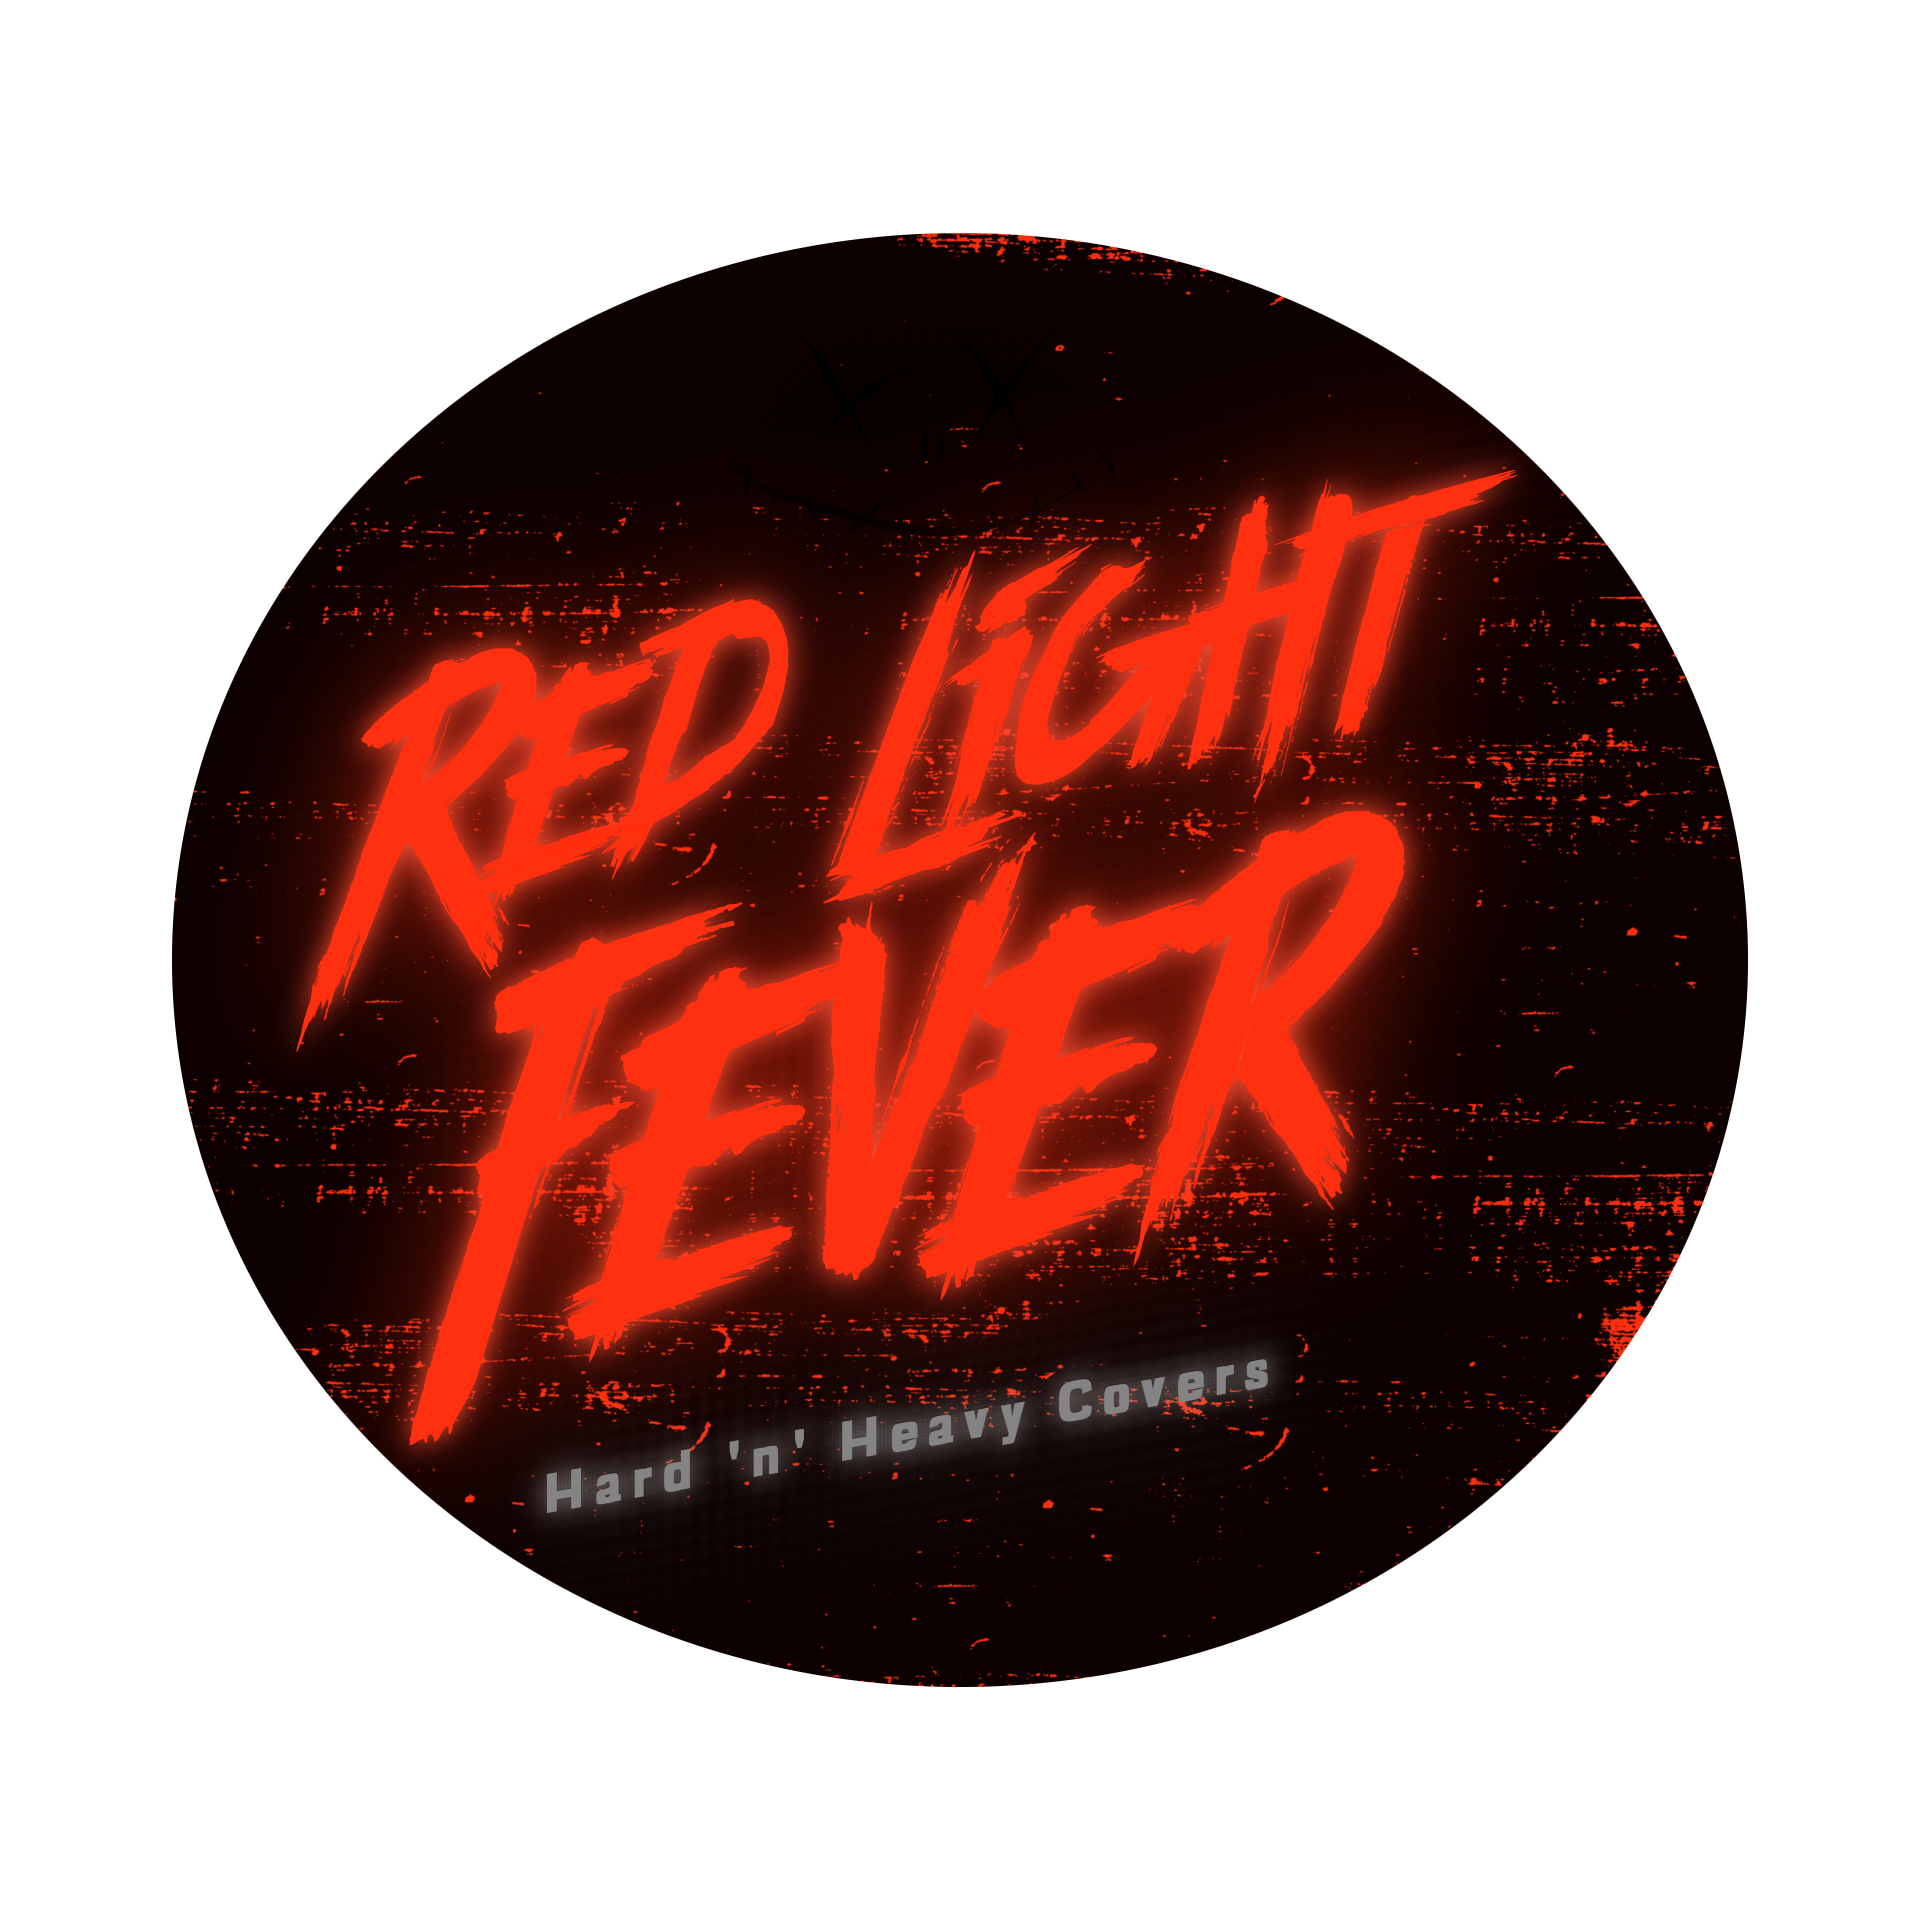 Red Light Fever - Hard 'n' Heavy Covers